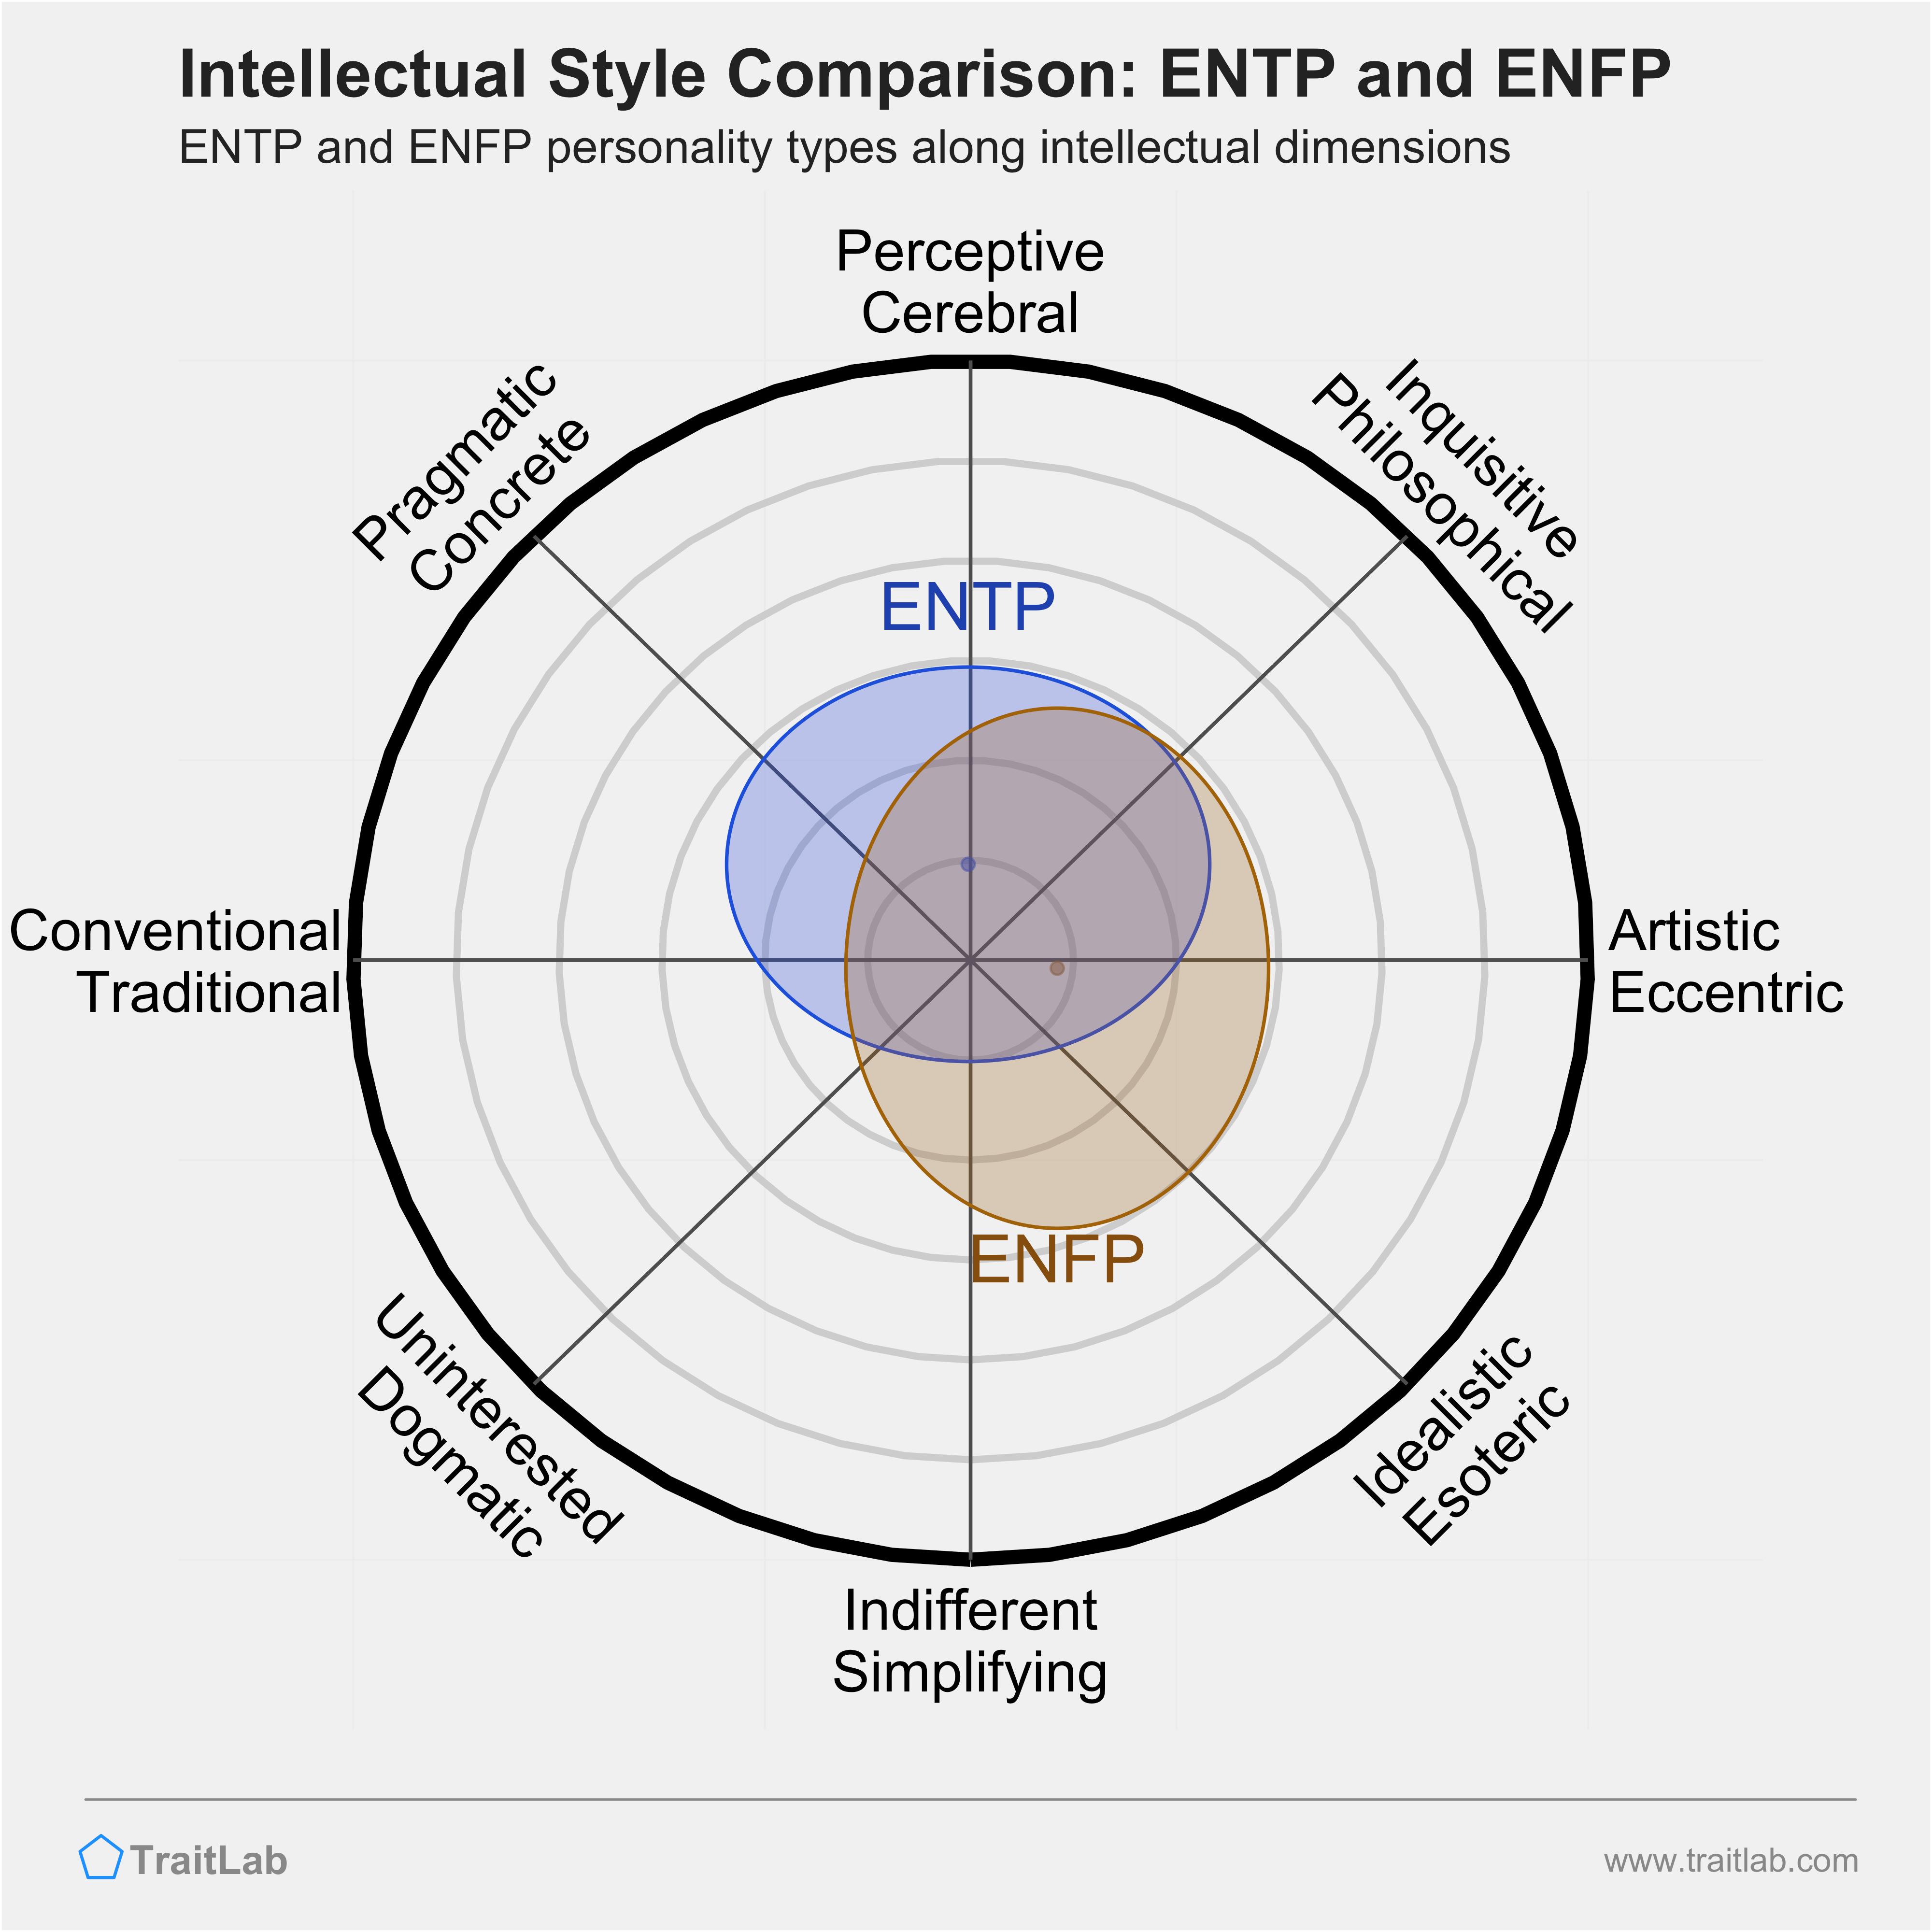 ENTP and ENFP comparison across intellectual dimensions